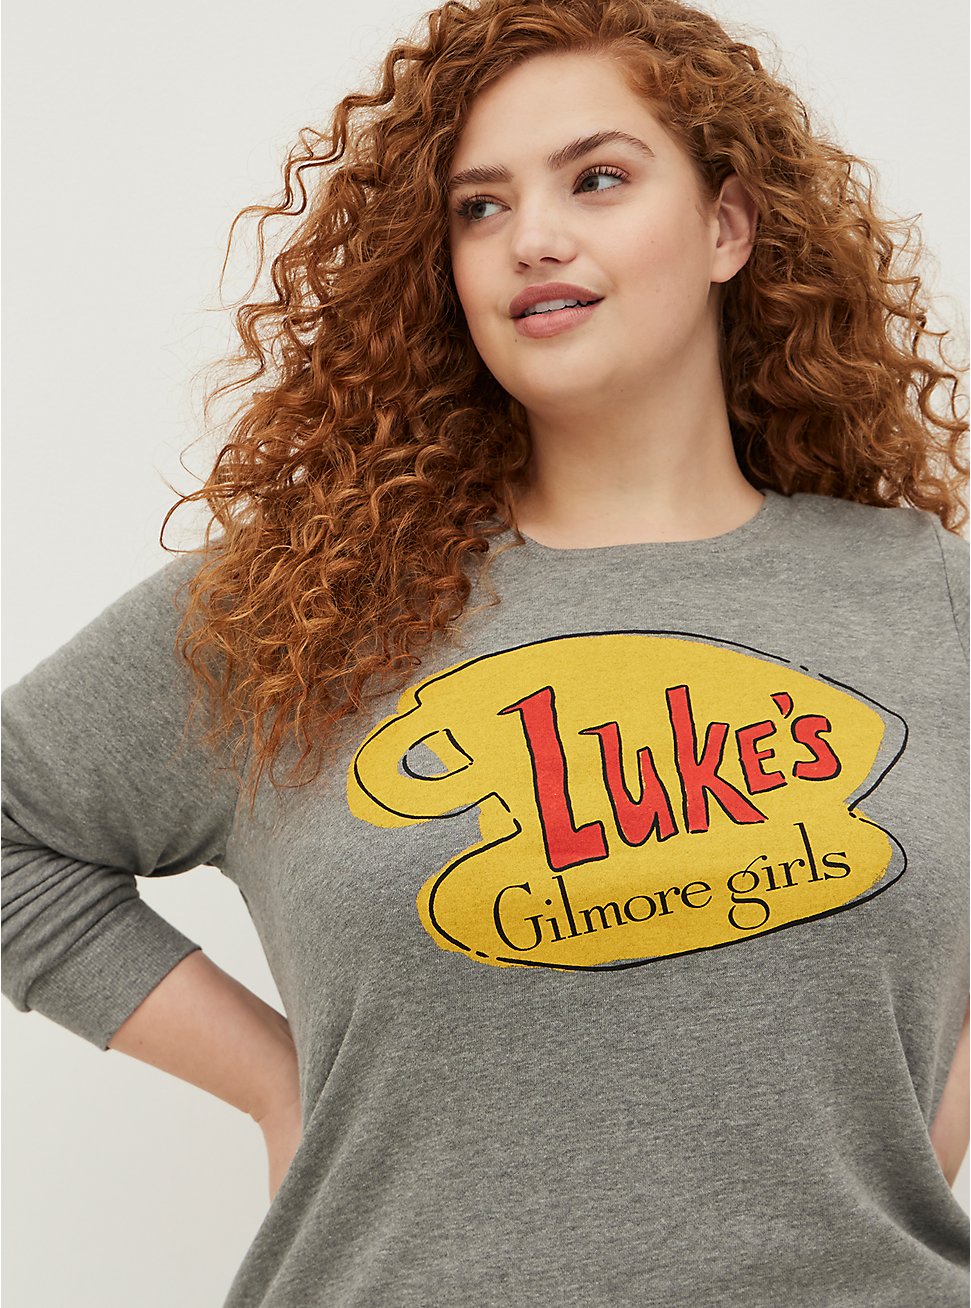 Sweatshirt - Warner Bros. Gilmore Girls Luke's, LIGHT GREY HEATHER, hi-res